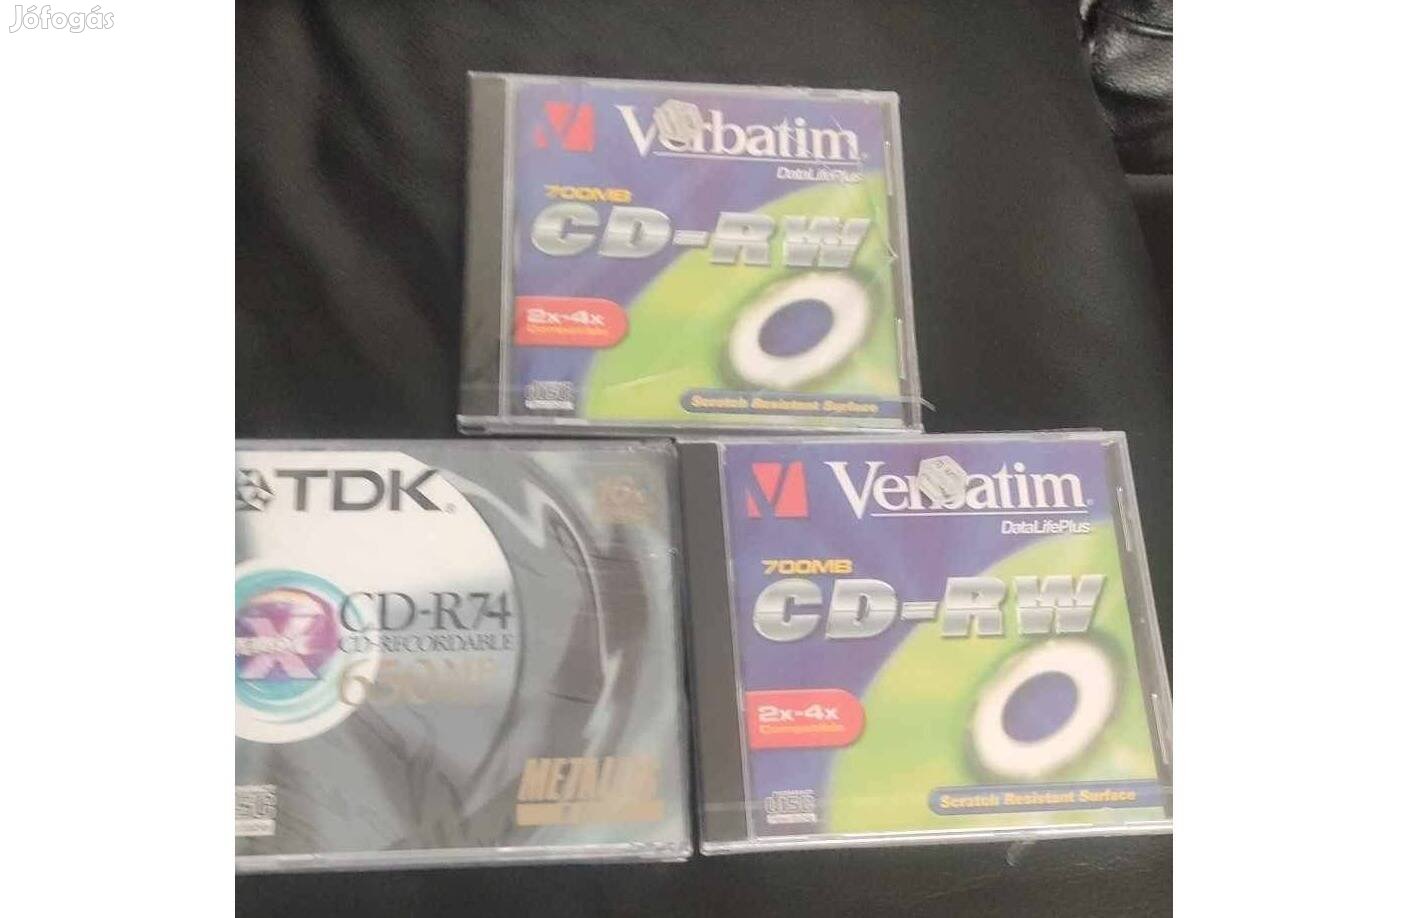 TDK CD-R74 és Verbatin CD-RW Bontatlan CD- lemezek